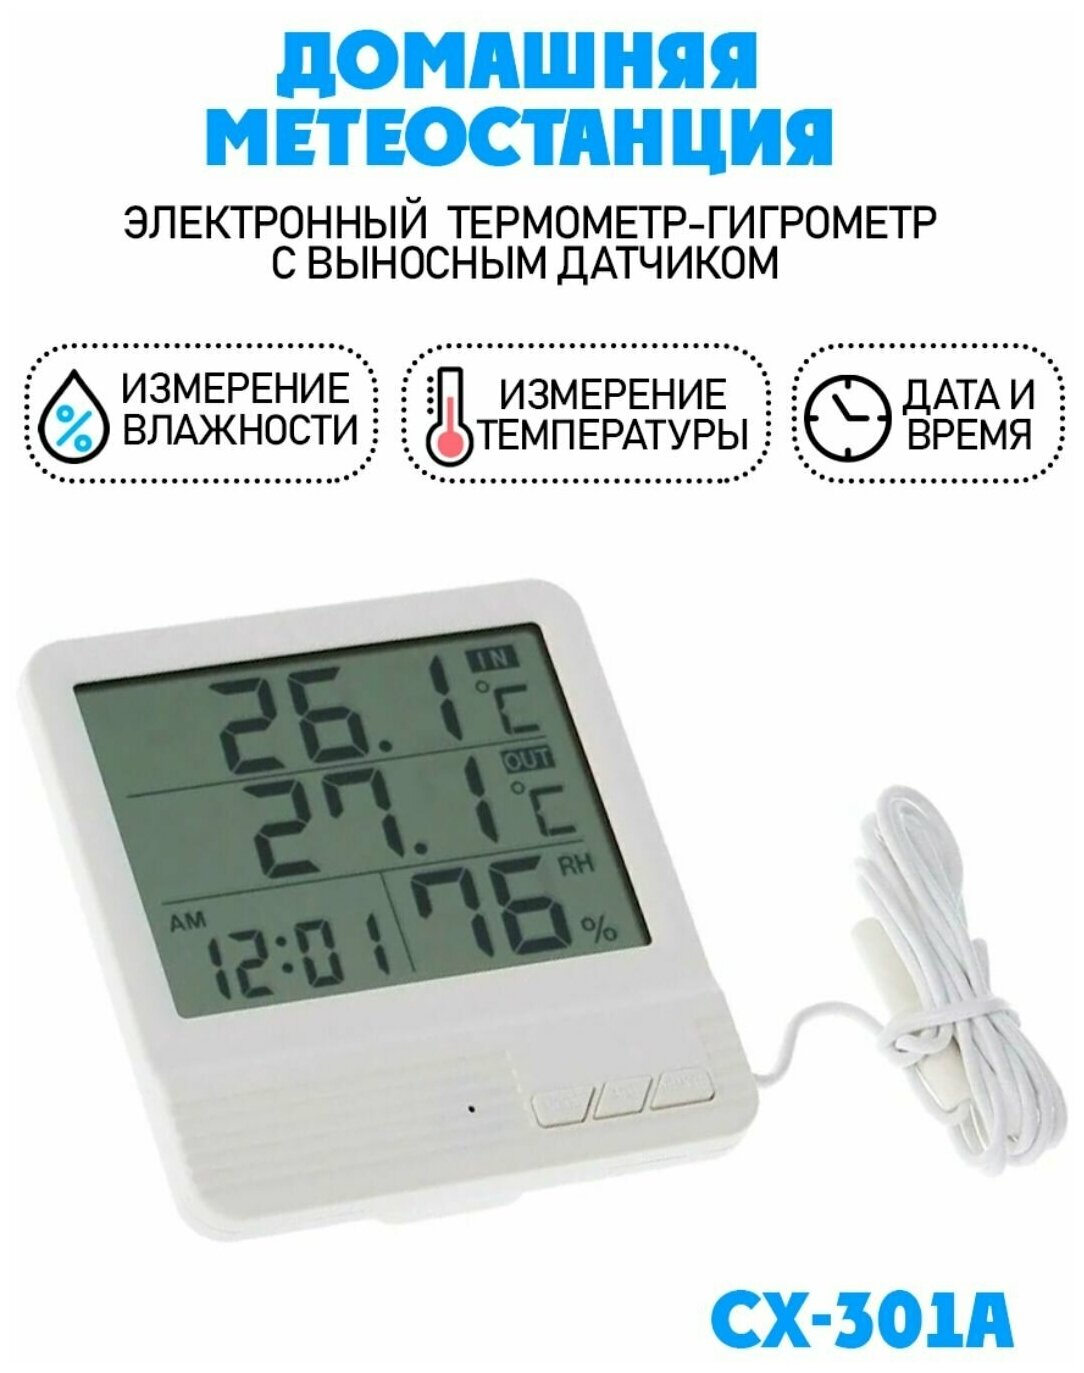 Термометр/ термометр гигрометр цифровой / выносной датчик/ CX-301A цвет белый